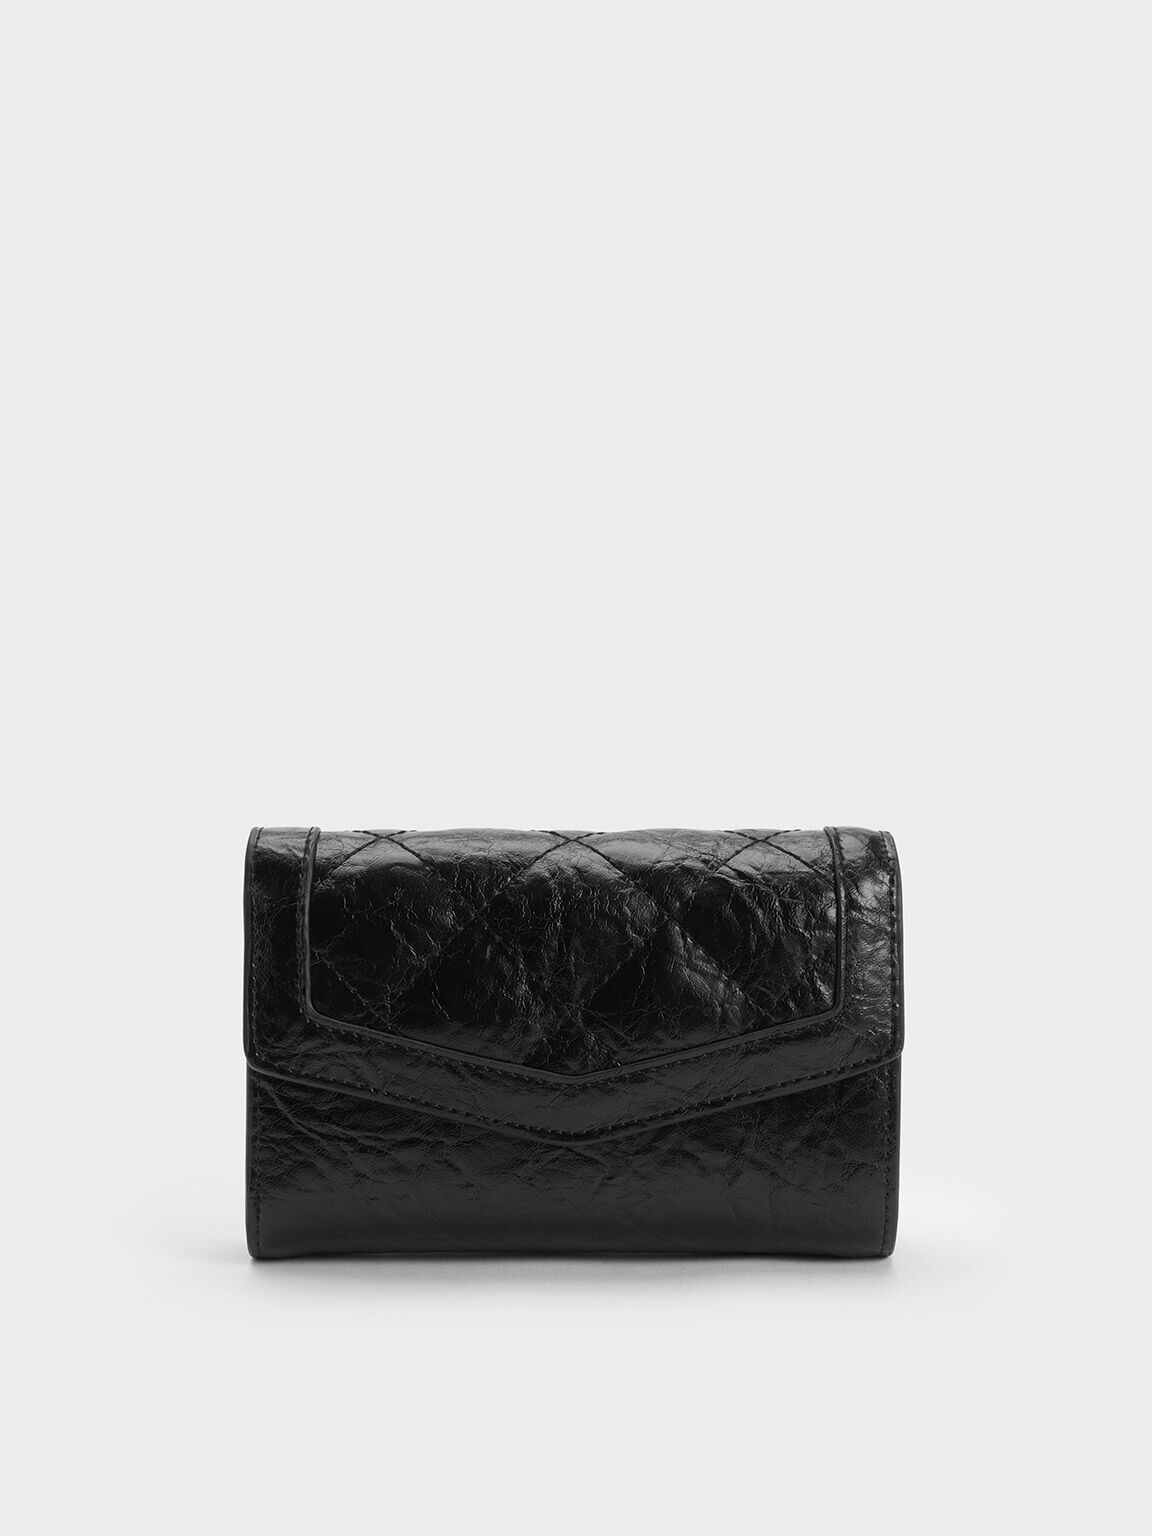 Arley Wrinkled Quilted Wallet, Black, hi-res